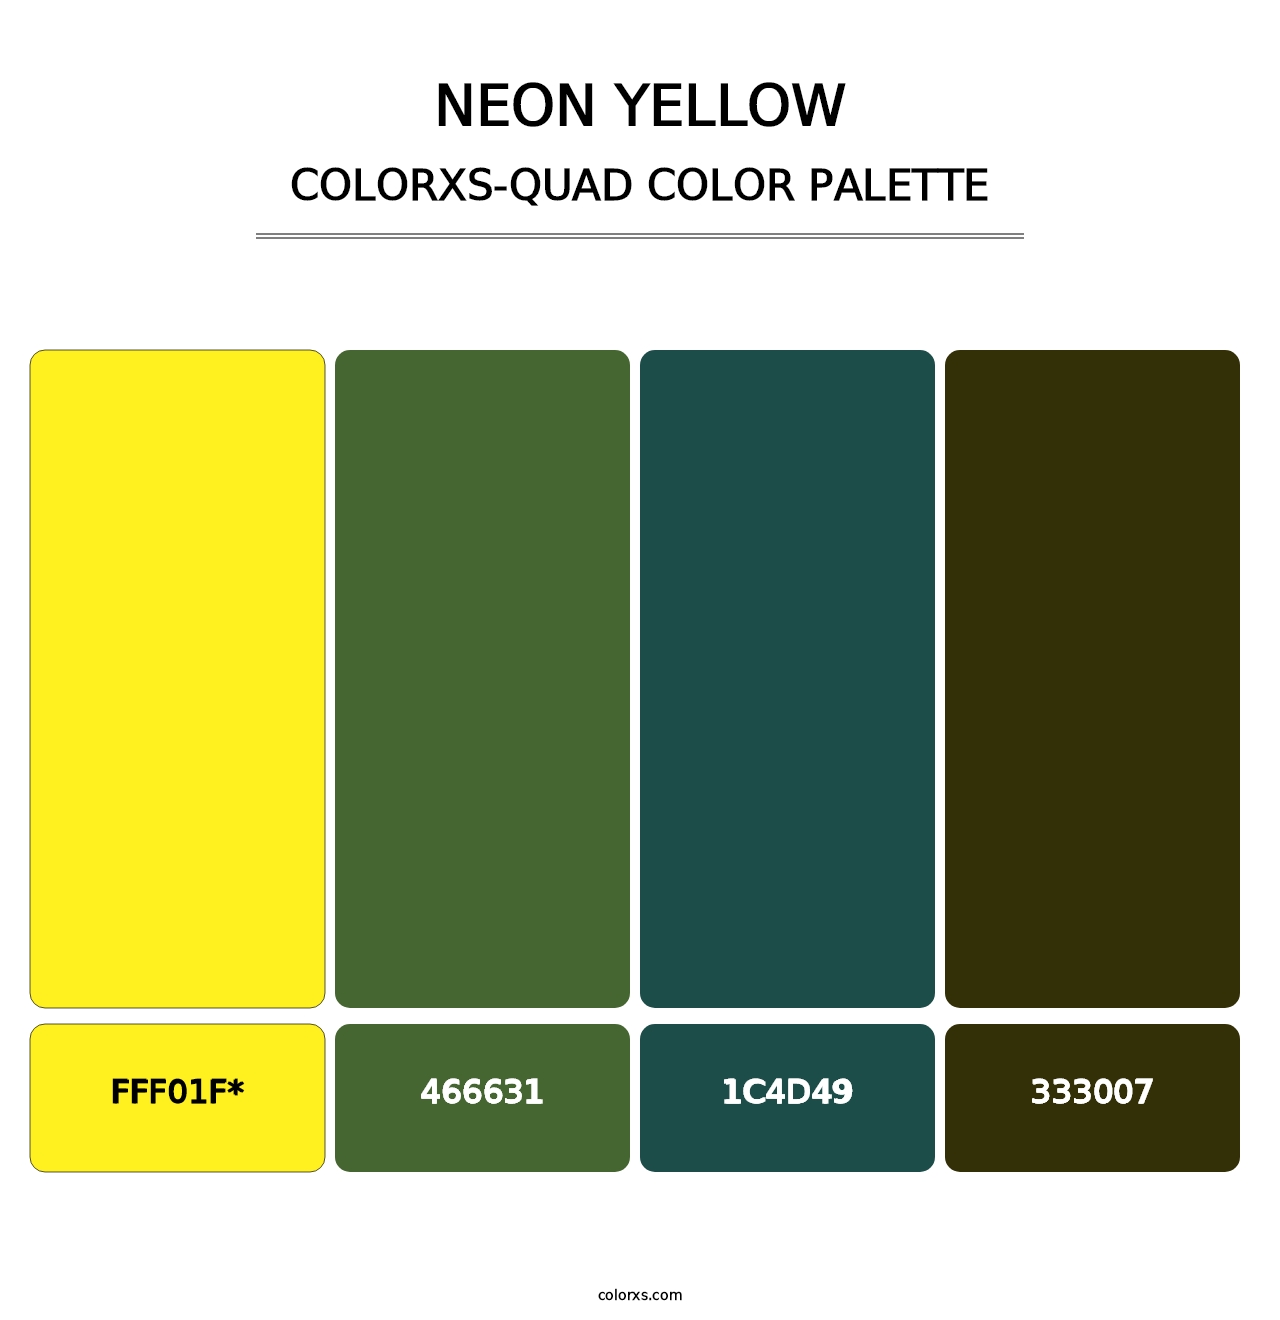 Neon Yellow - Colorxs Quad Palette